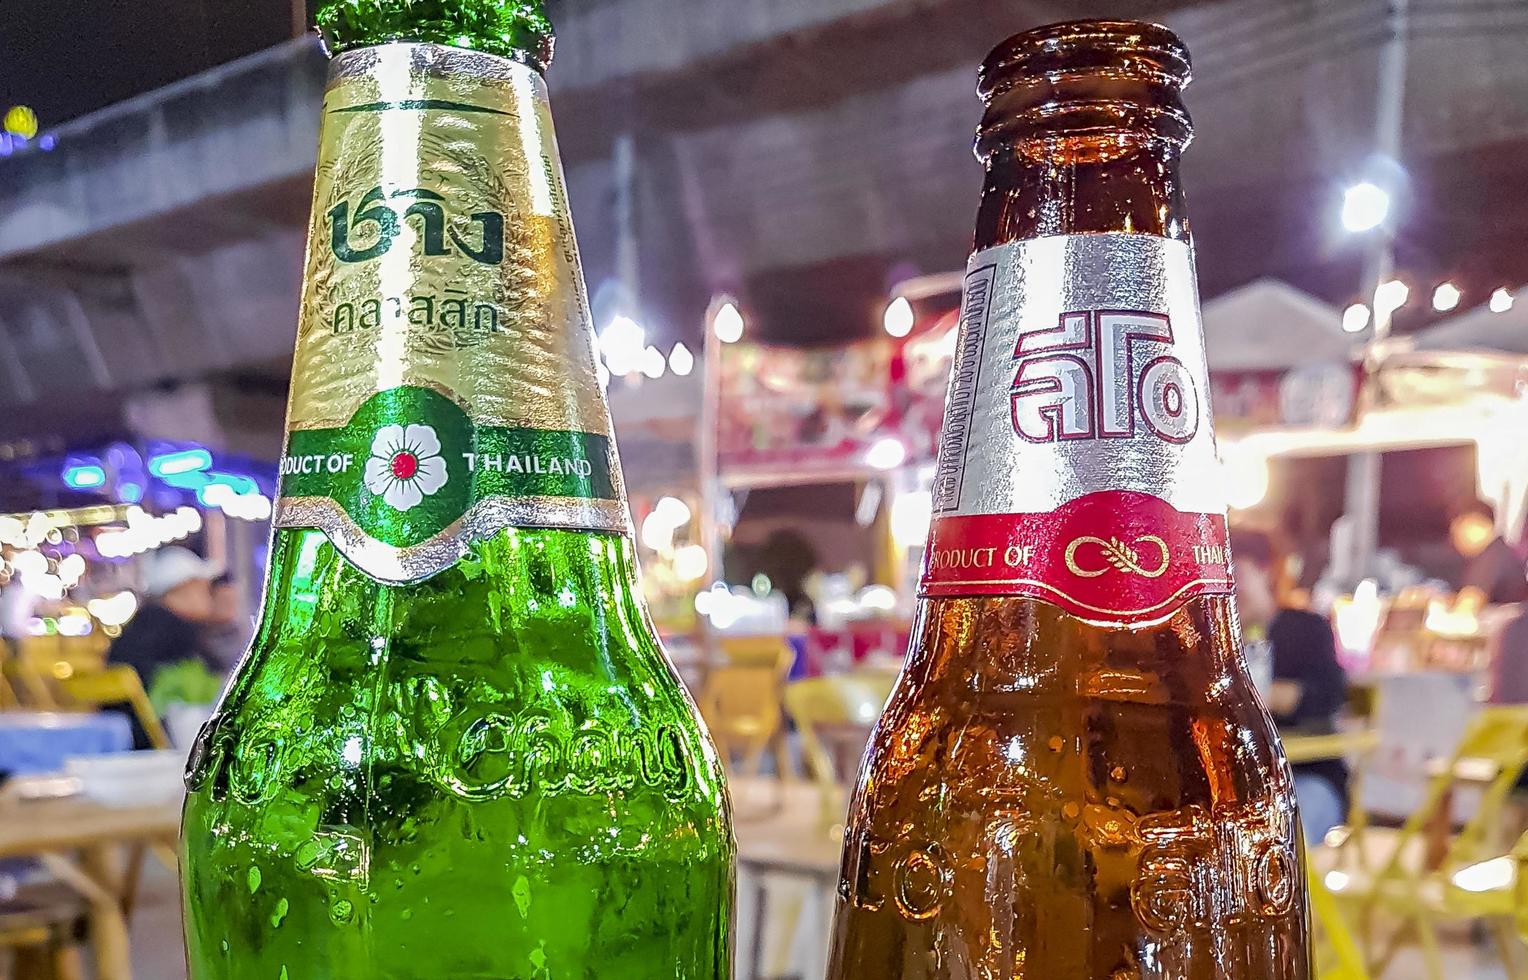 bangkok thaïlande 22. mai 2018 chang leo bière thai marché de nuit nourriture de rue bangkok thaïlande. photo